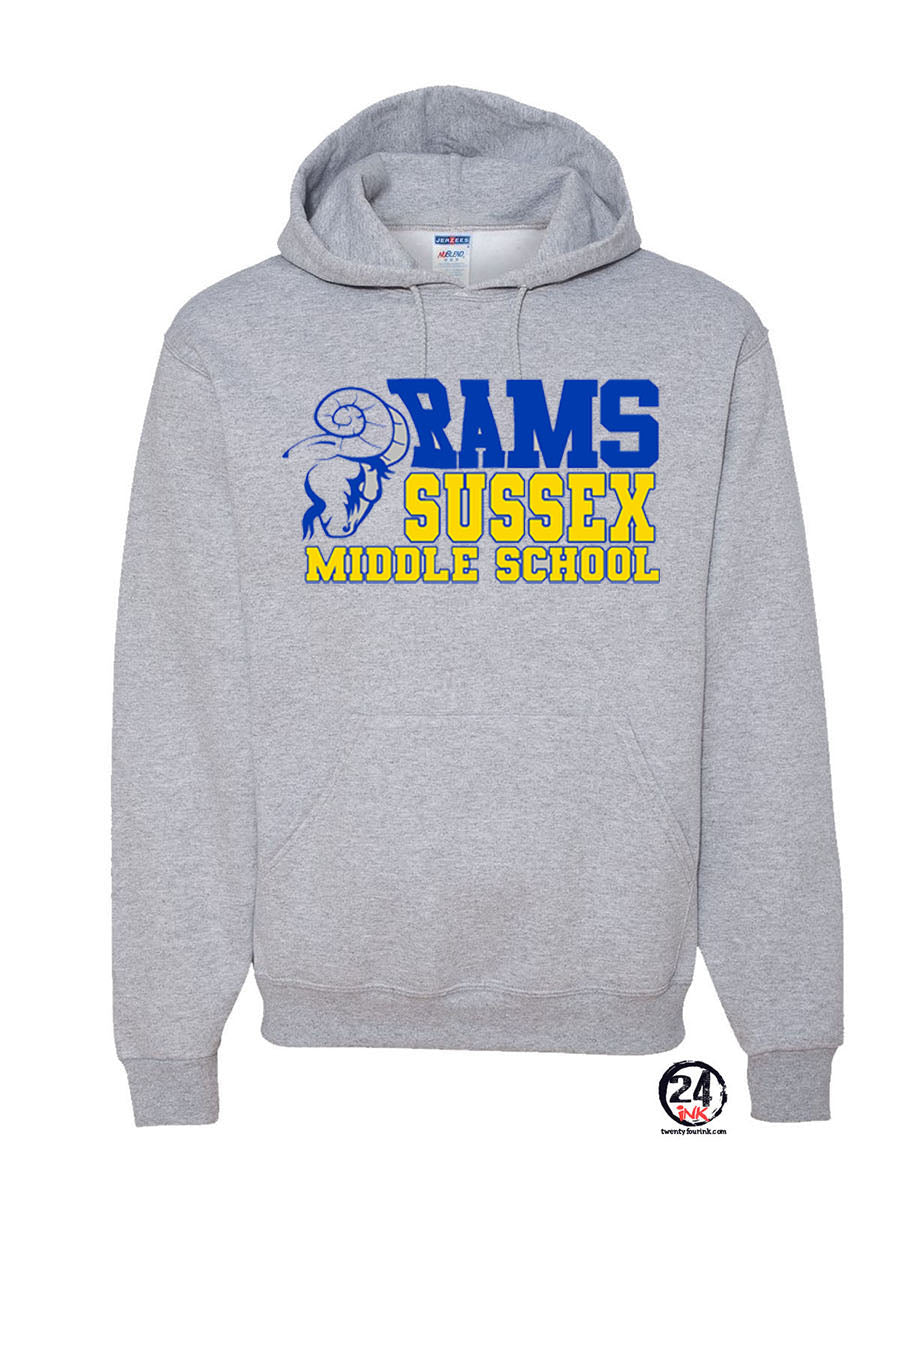 Sussex Middle Design 2 Hooded Sweatshirt